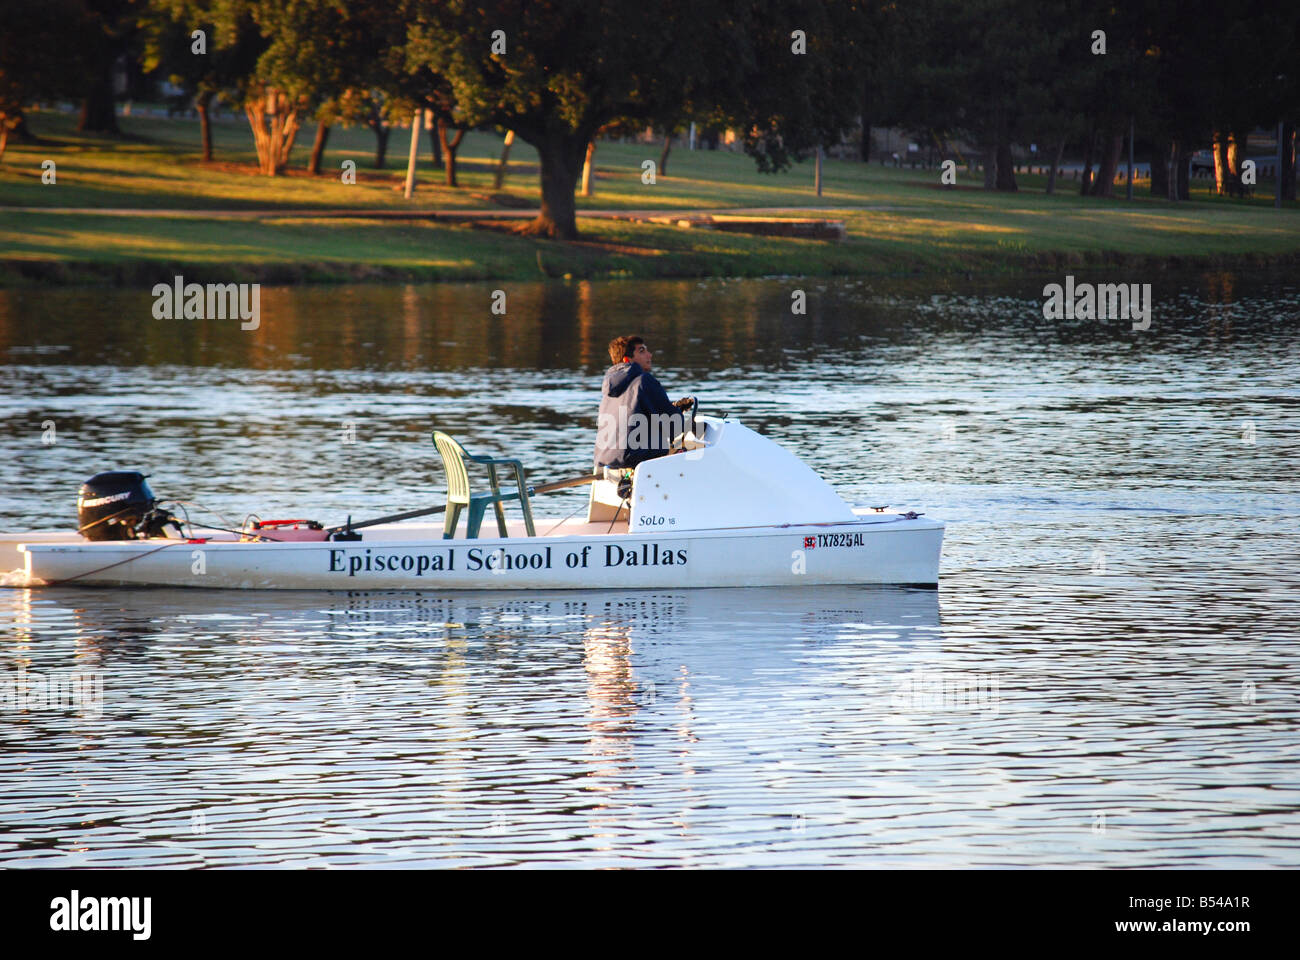 Dallas Episcopal School Boat Stockfoto